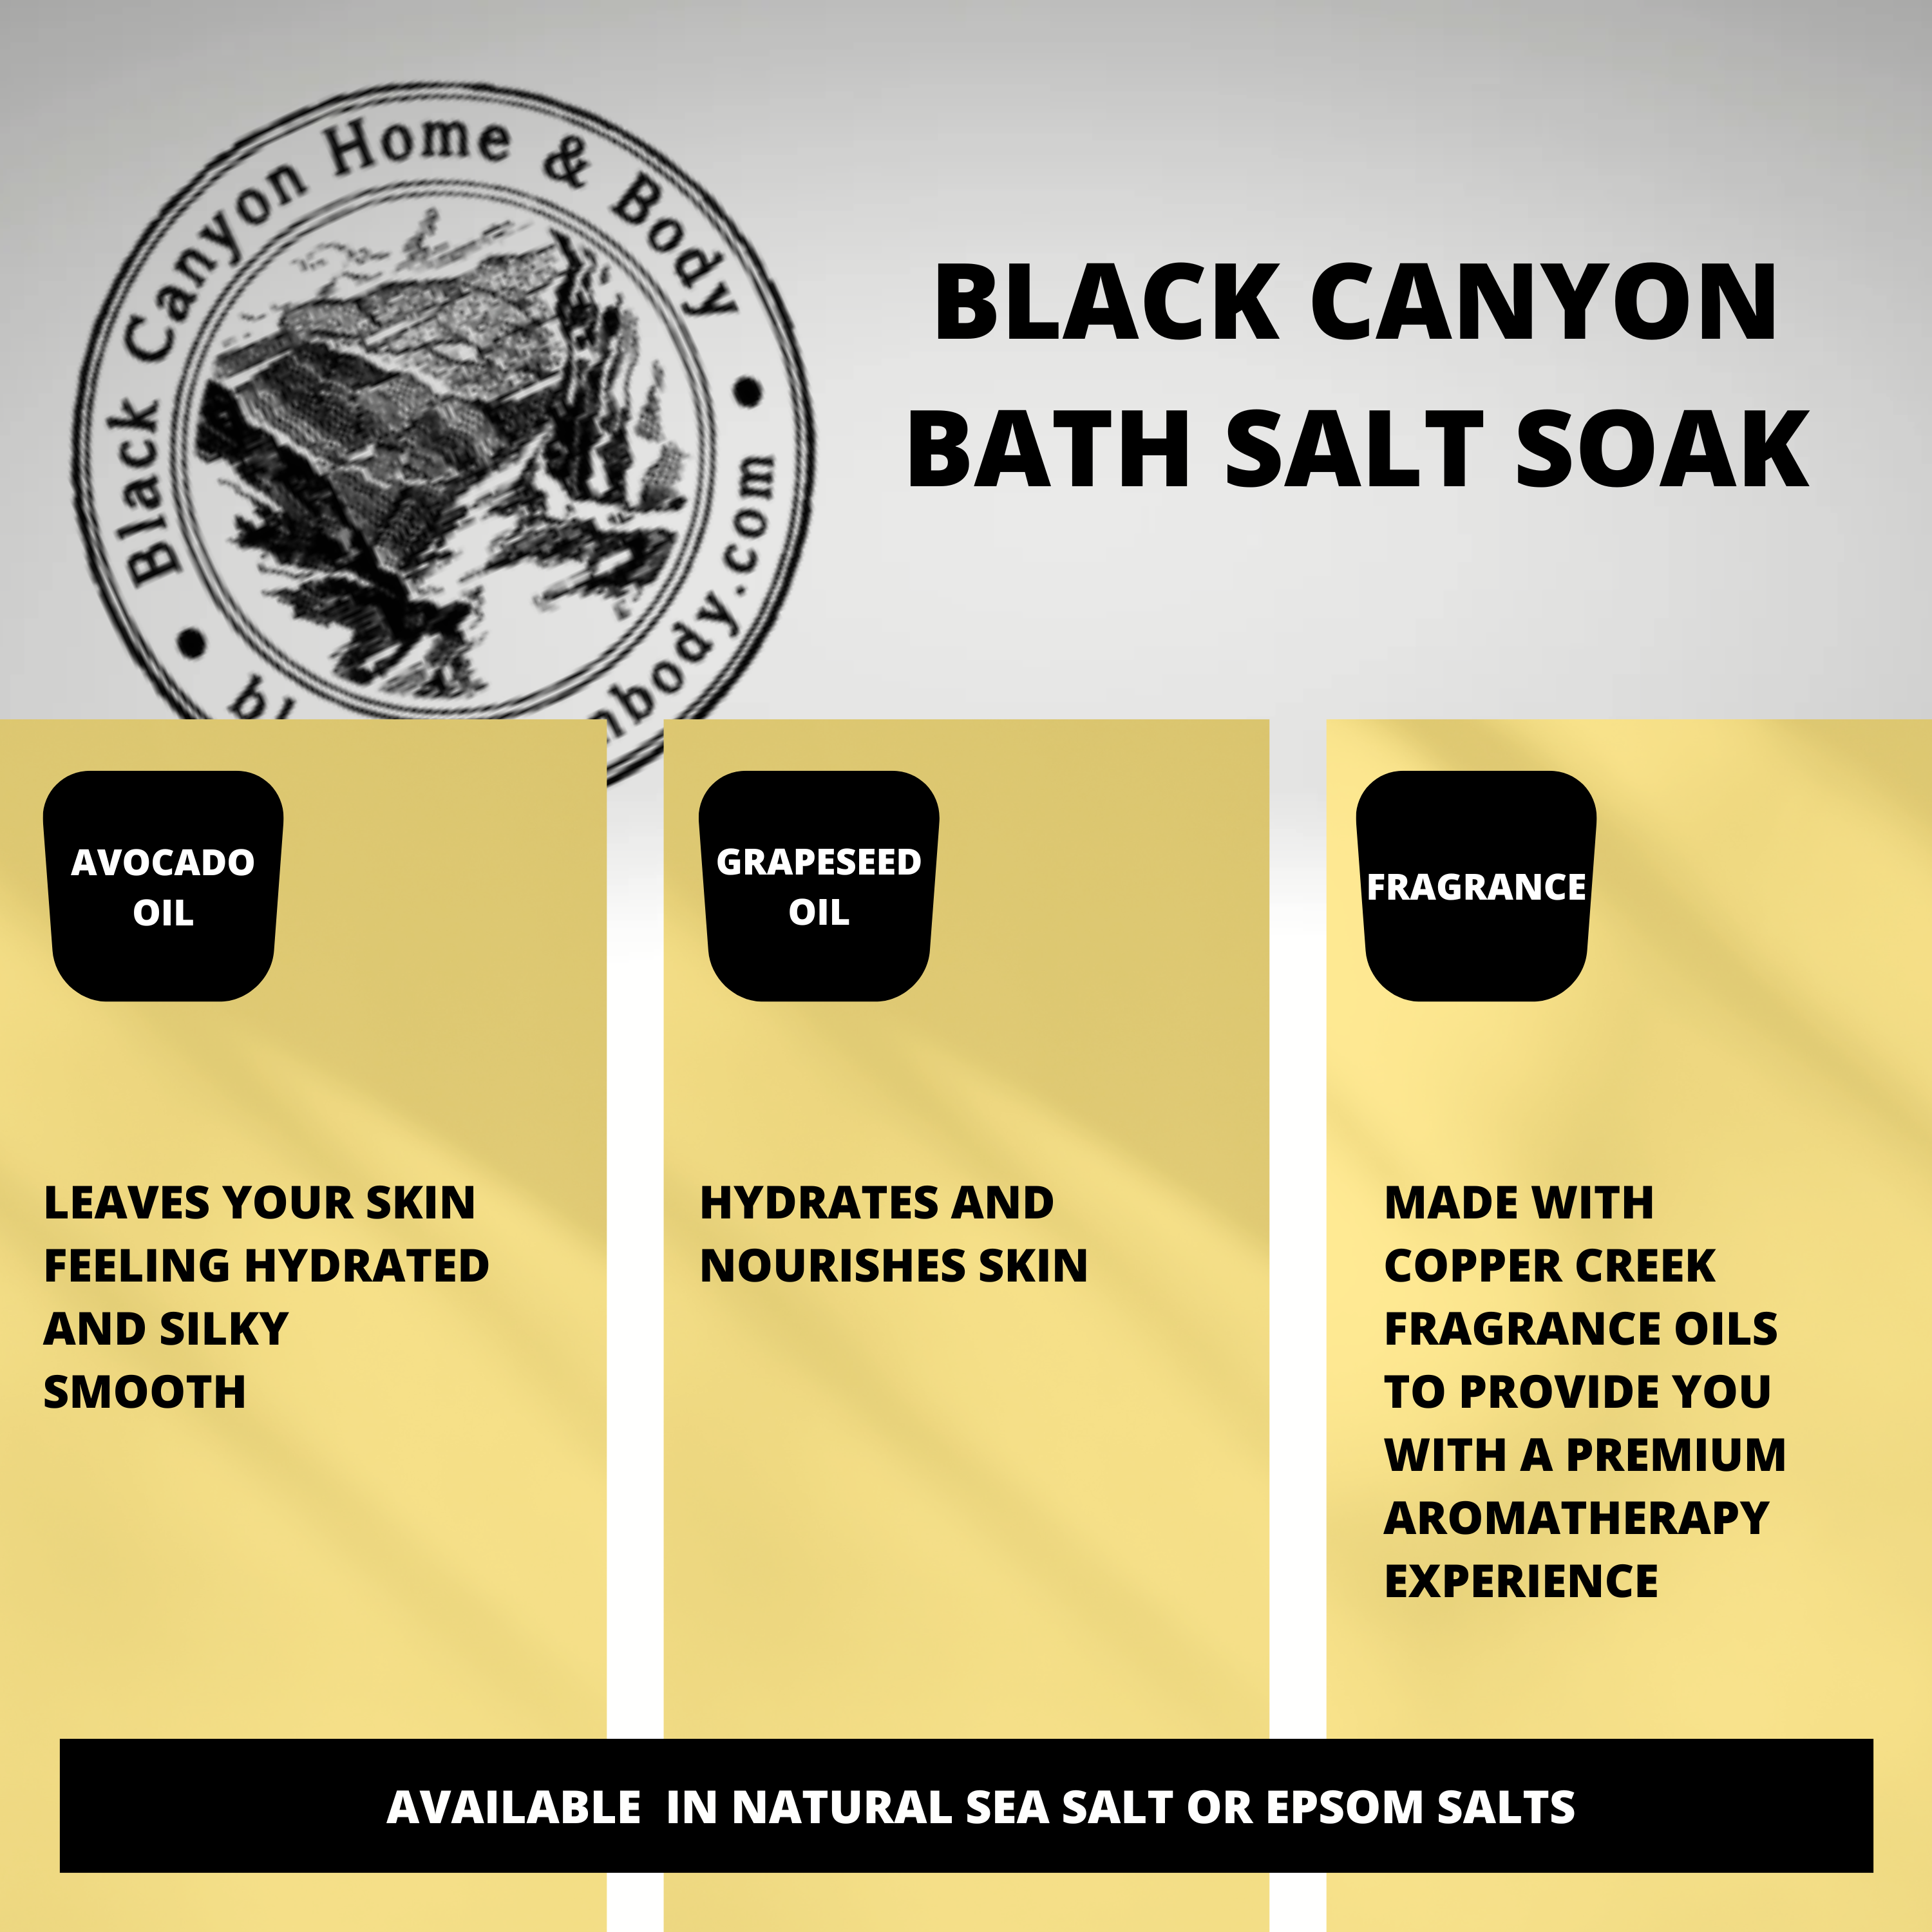 Black Canyon Chocolate Covered Cinnamon Bears Scented Epsom Salt Bath Soak